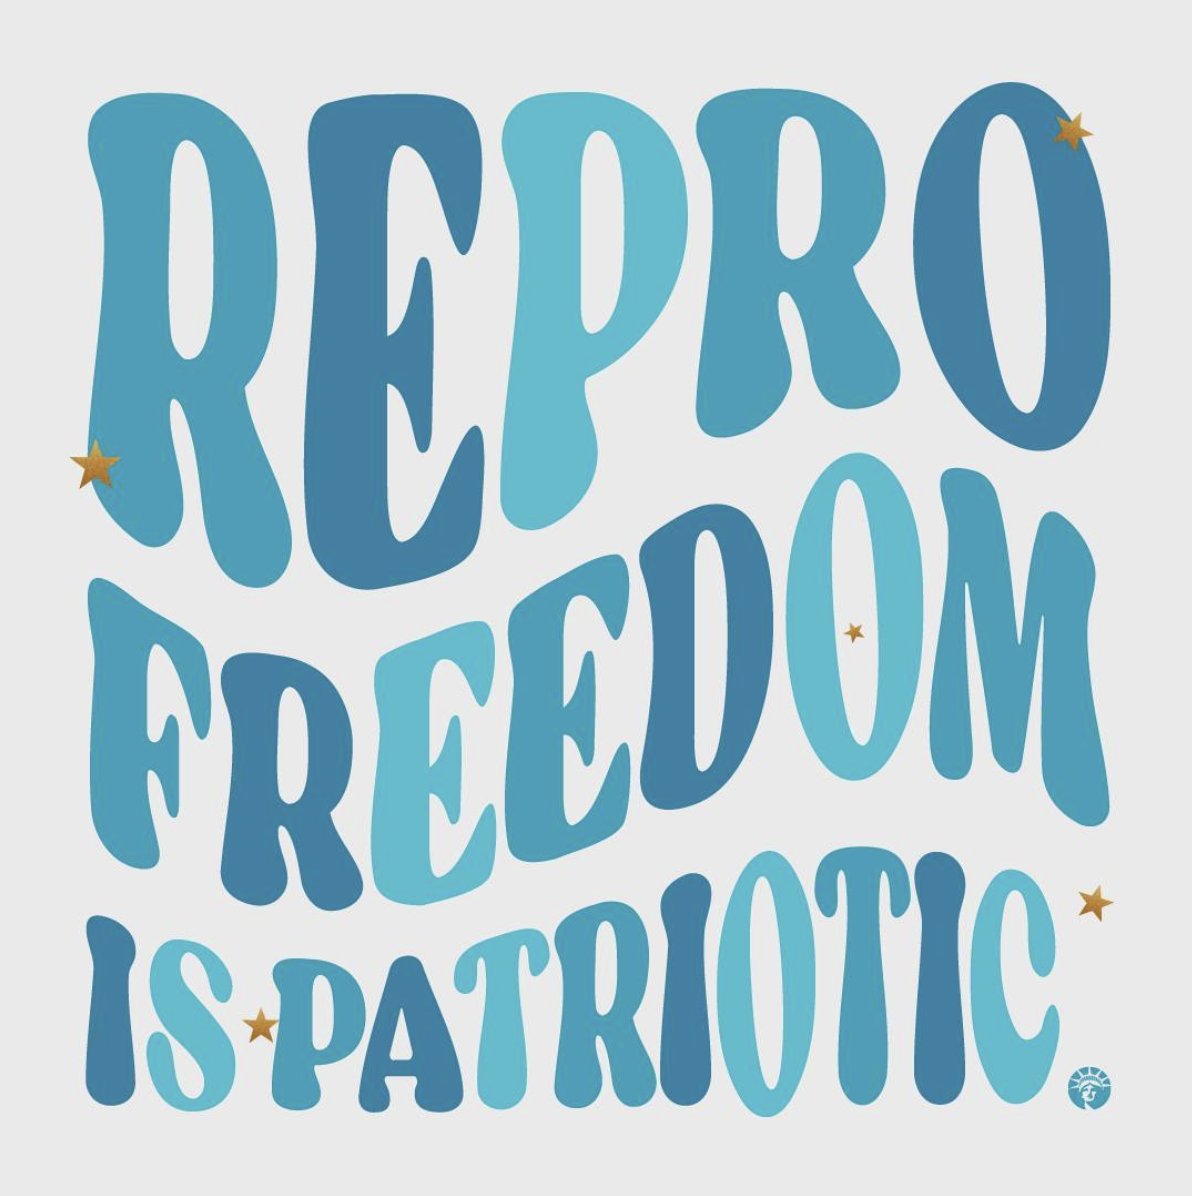 Repro freedom is patriotic